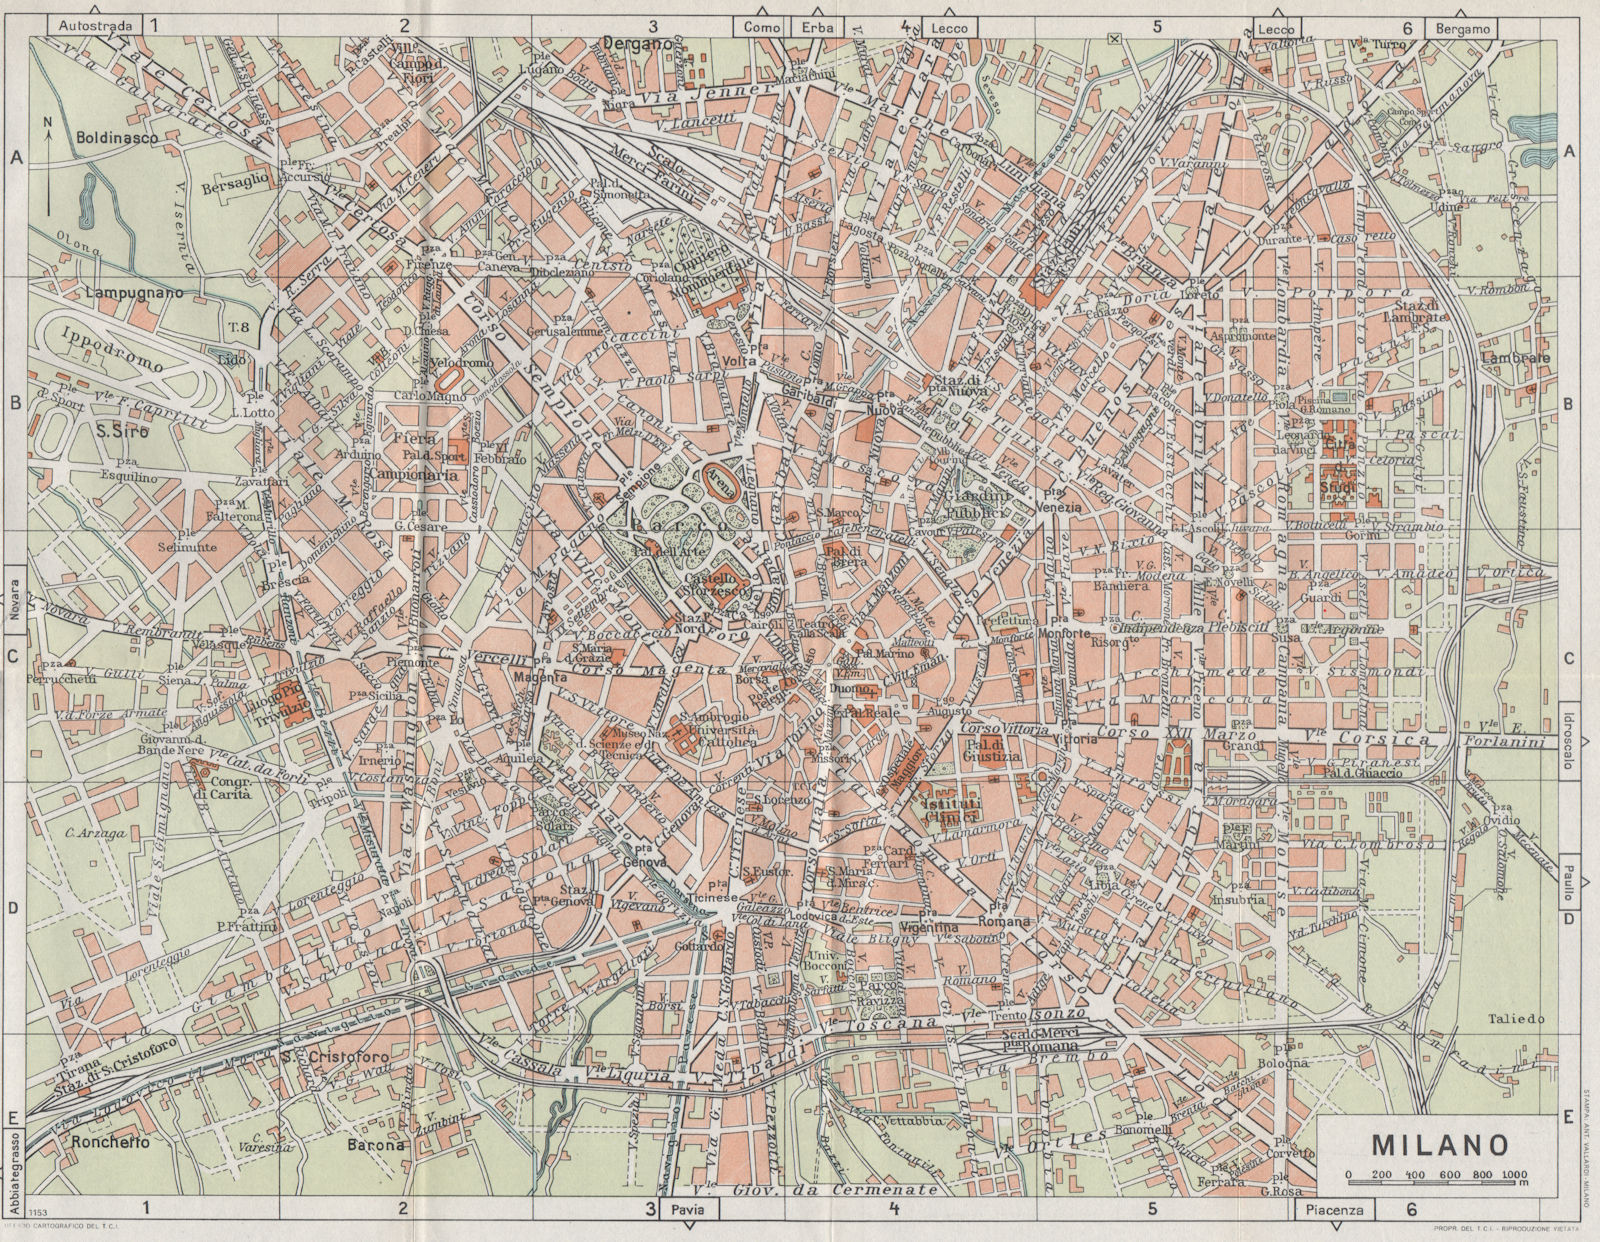 MILAN MILANO vintage town city map plan pianta della città. Italy 1958 old